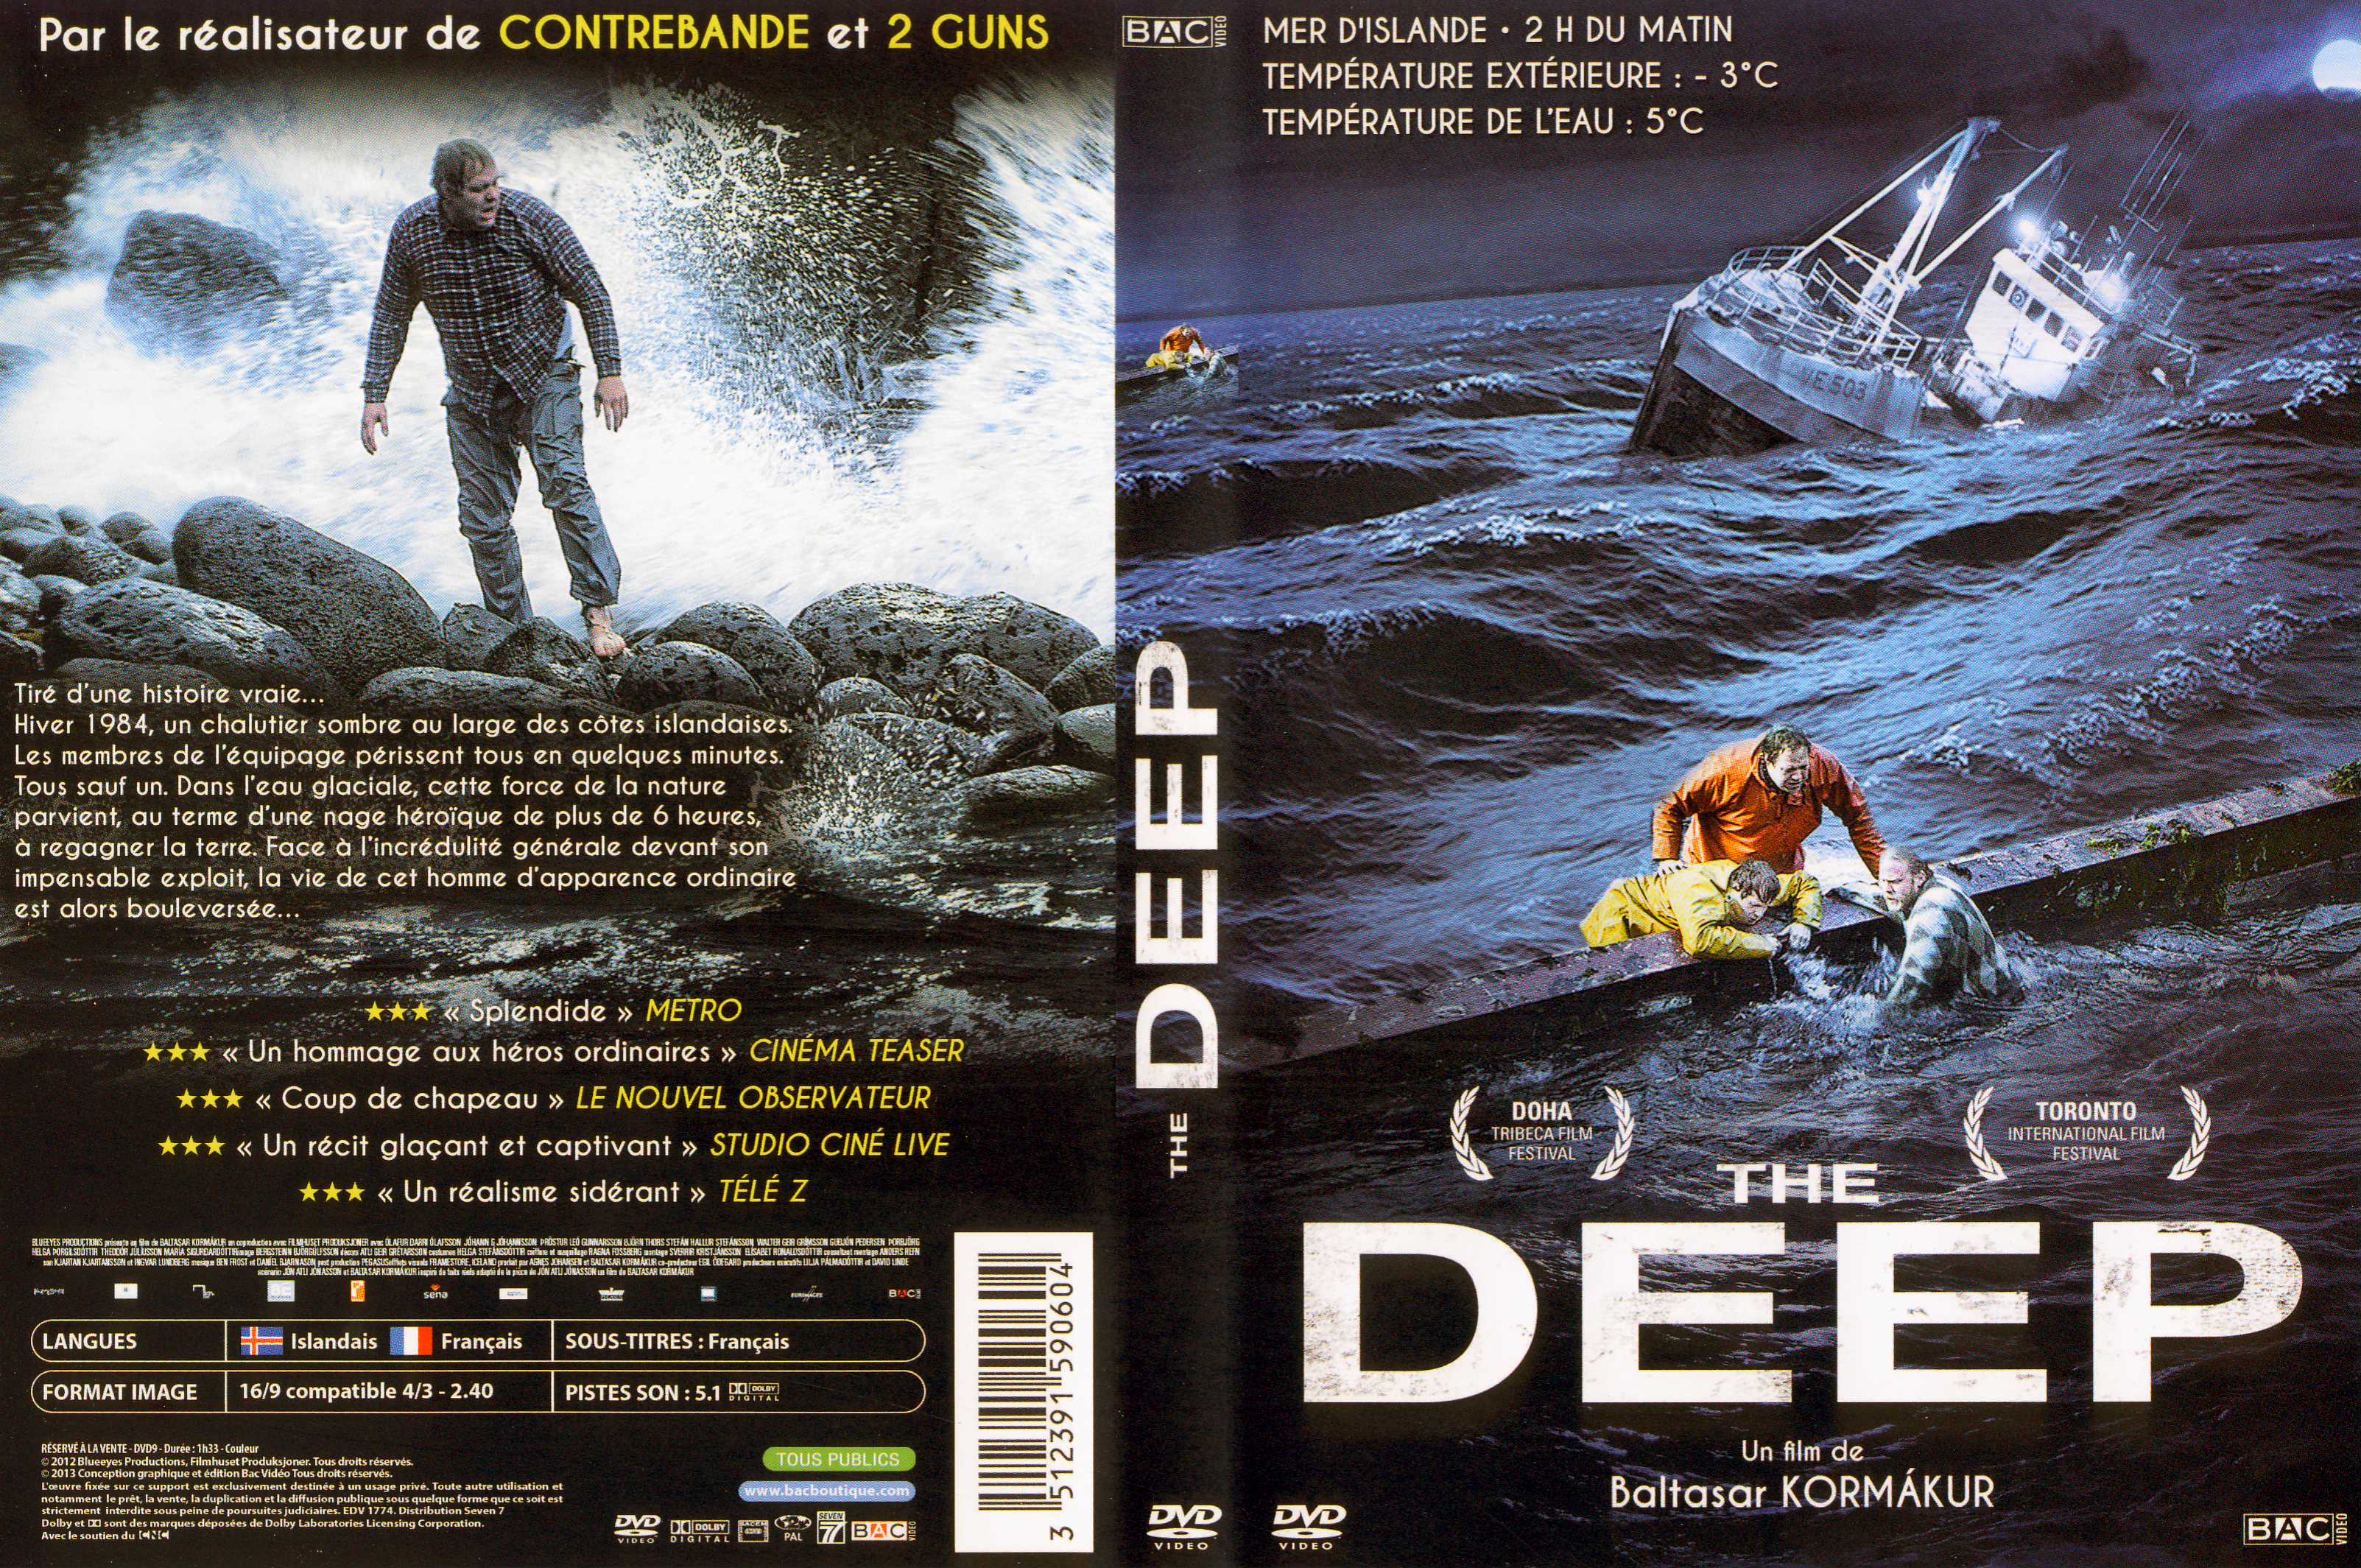 Jaquette DVD The deep